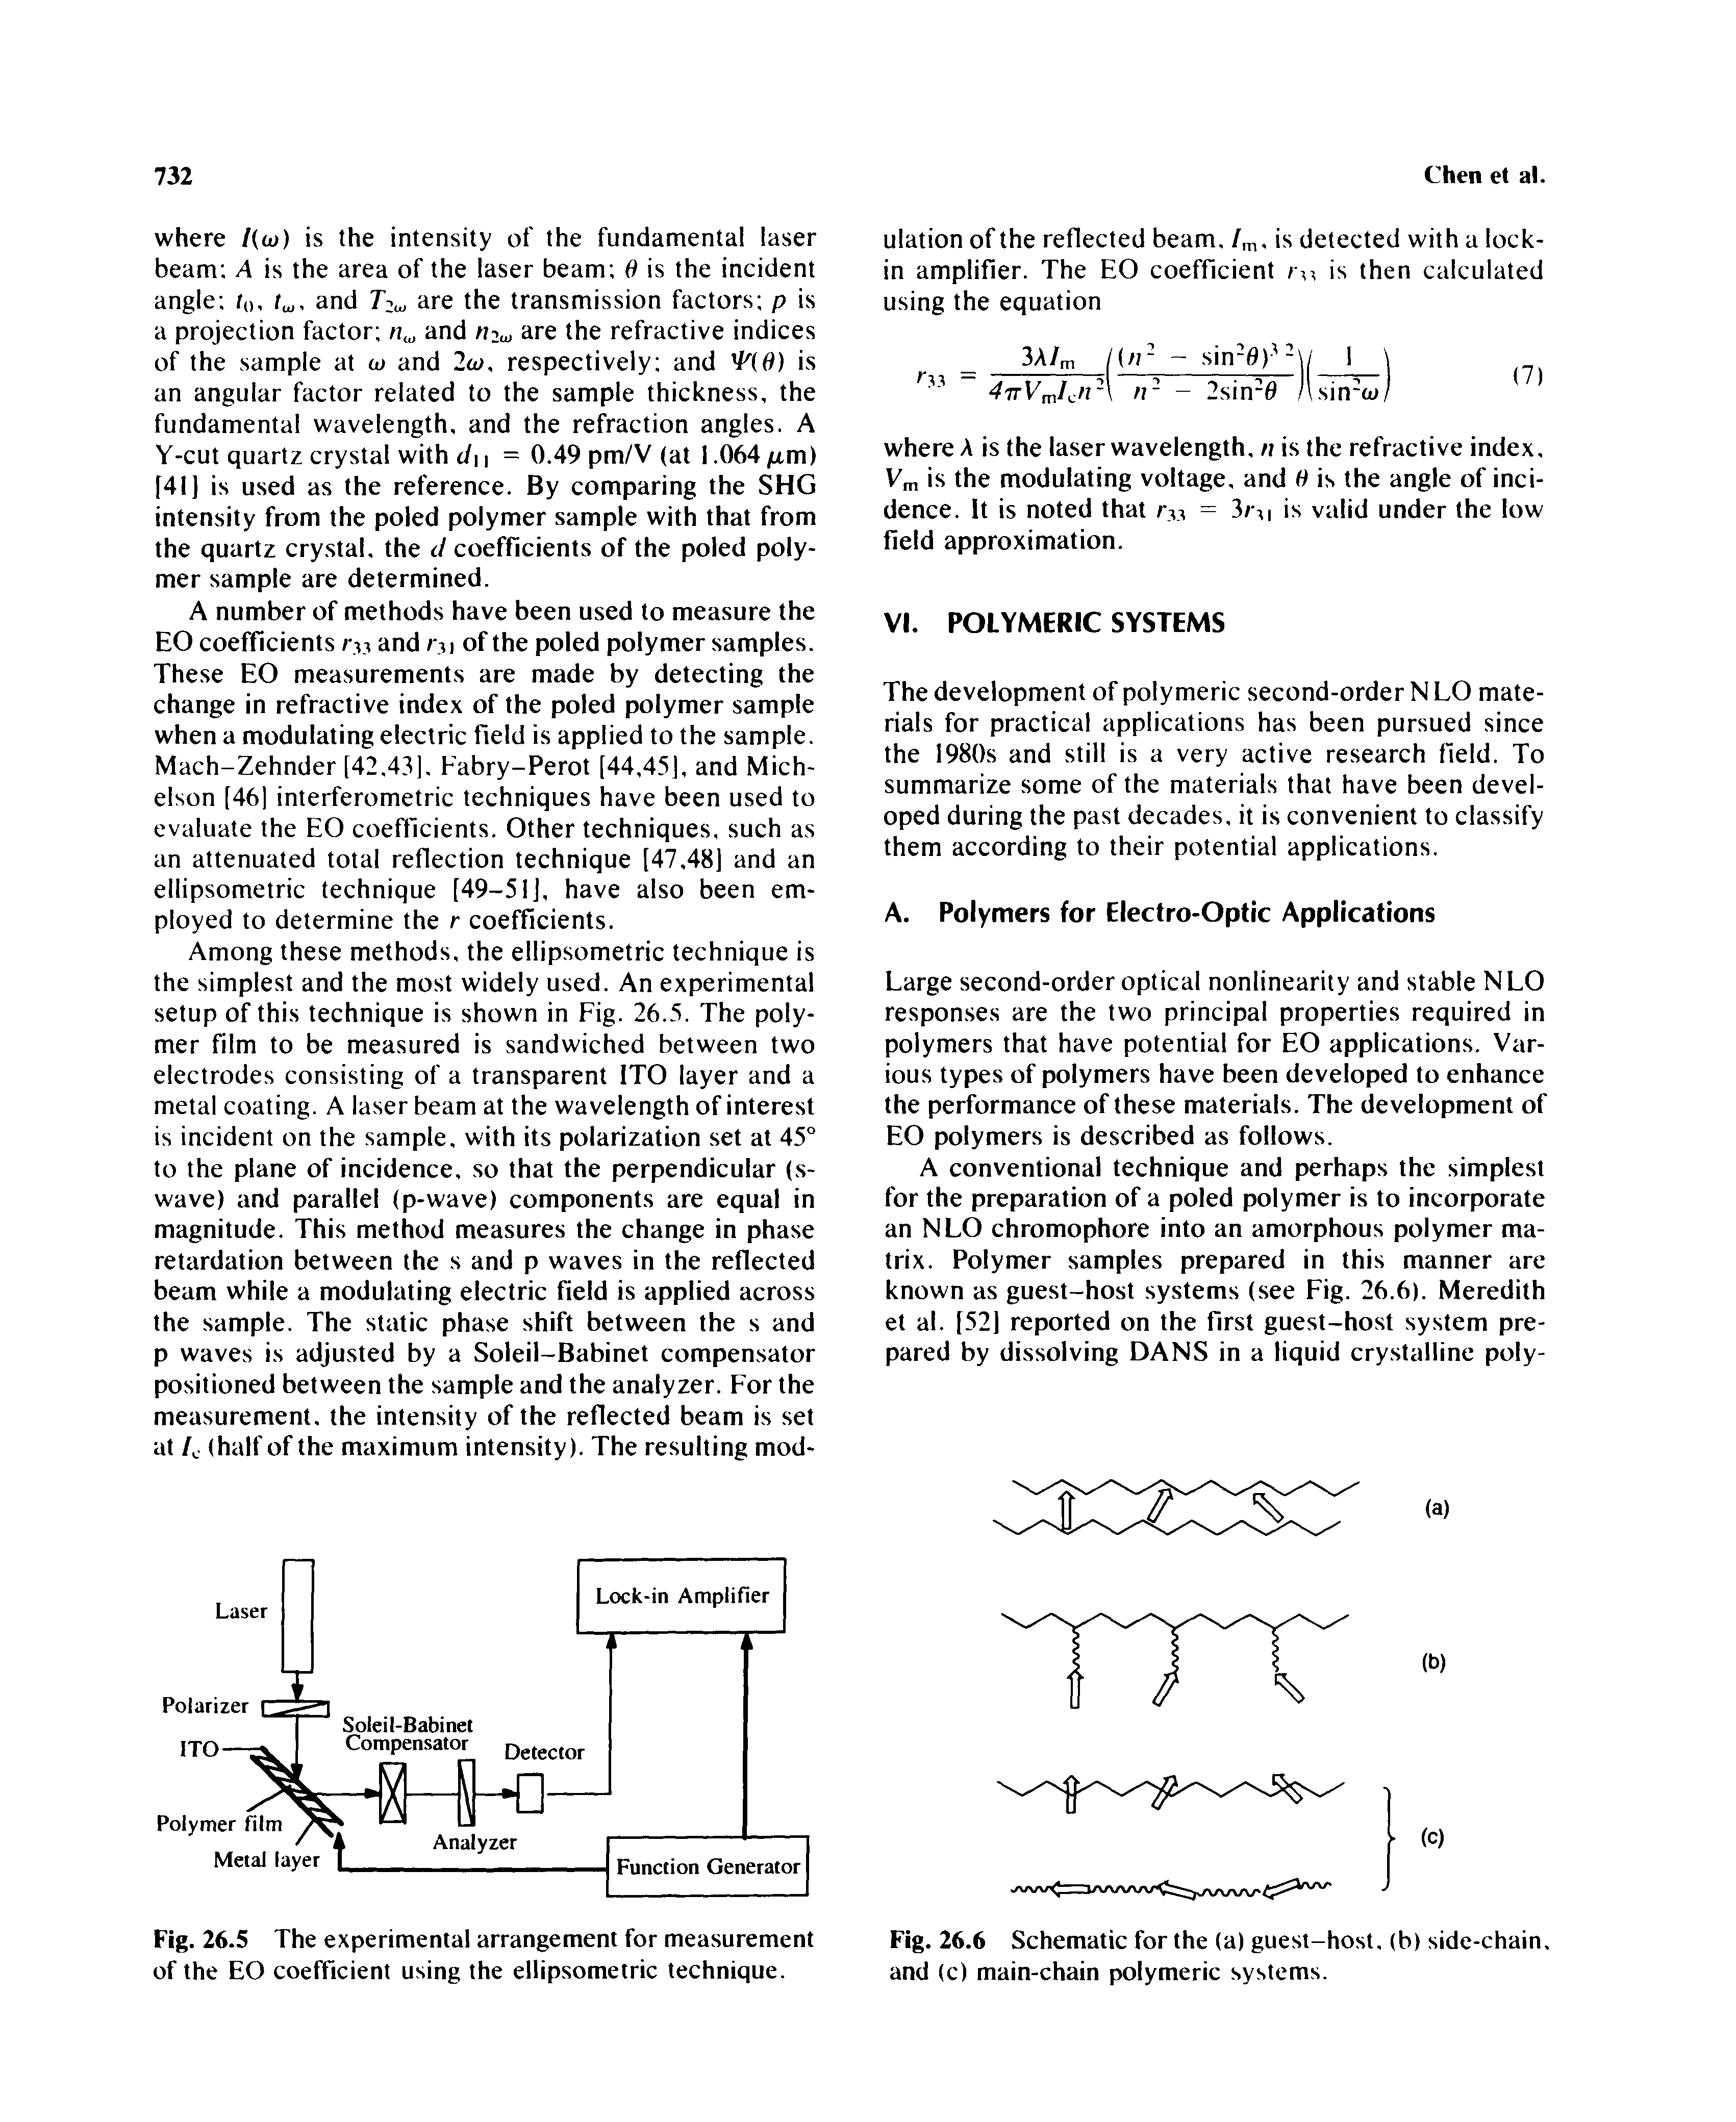 Fig. 26.5 The experimental arrangement for measurement of the EO coefficient using the ellipsometric technique.